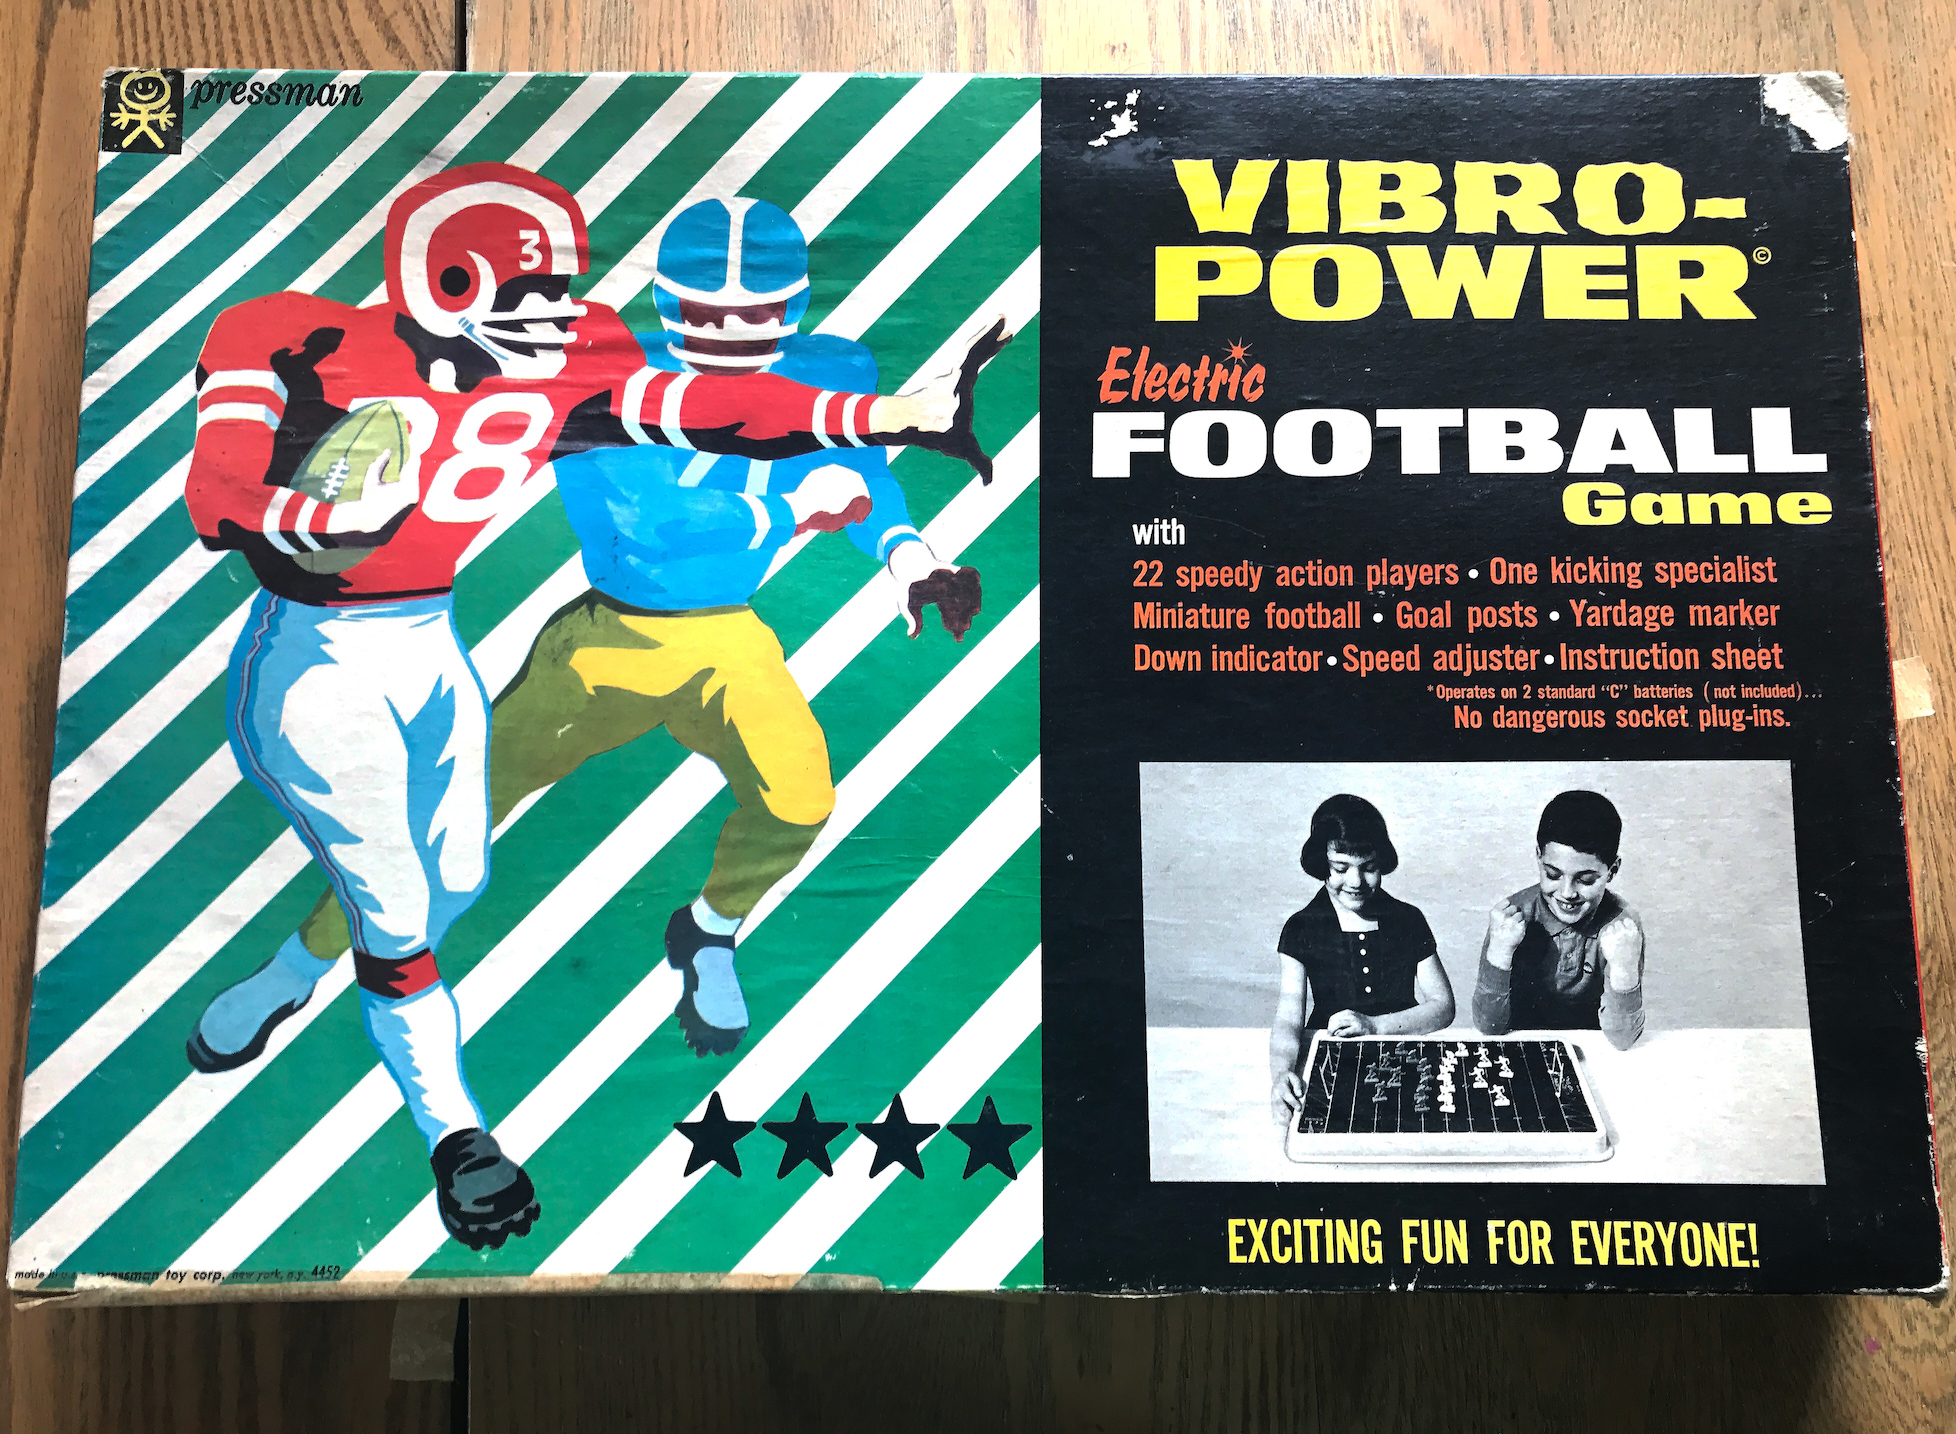 <img alt="Box of the Pressman Vibro-Power Football game">